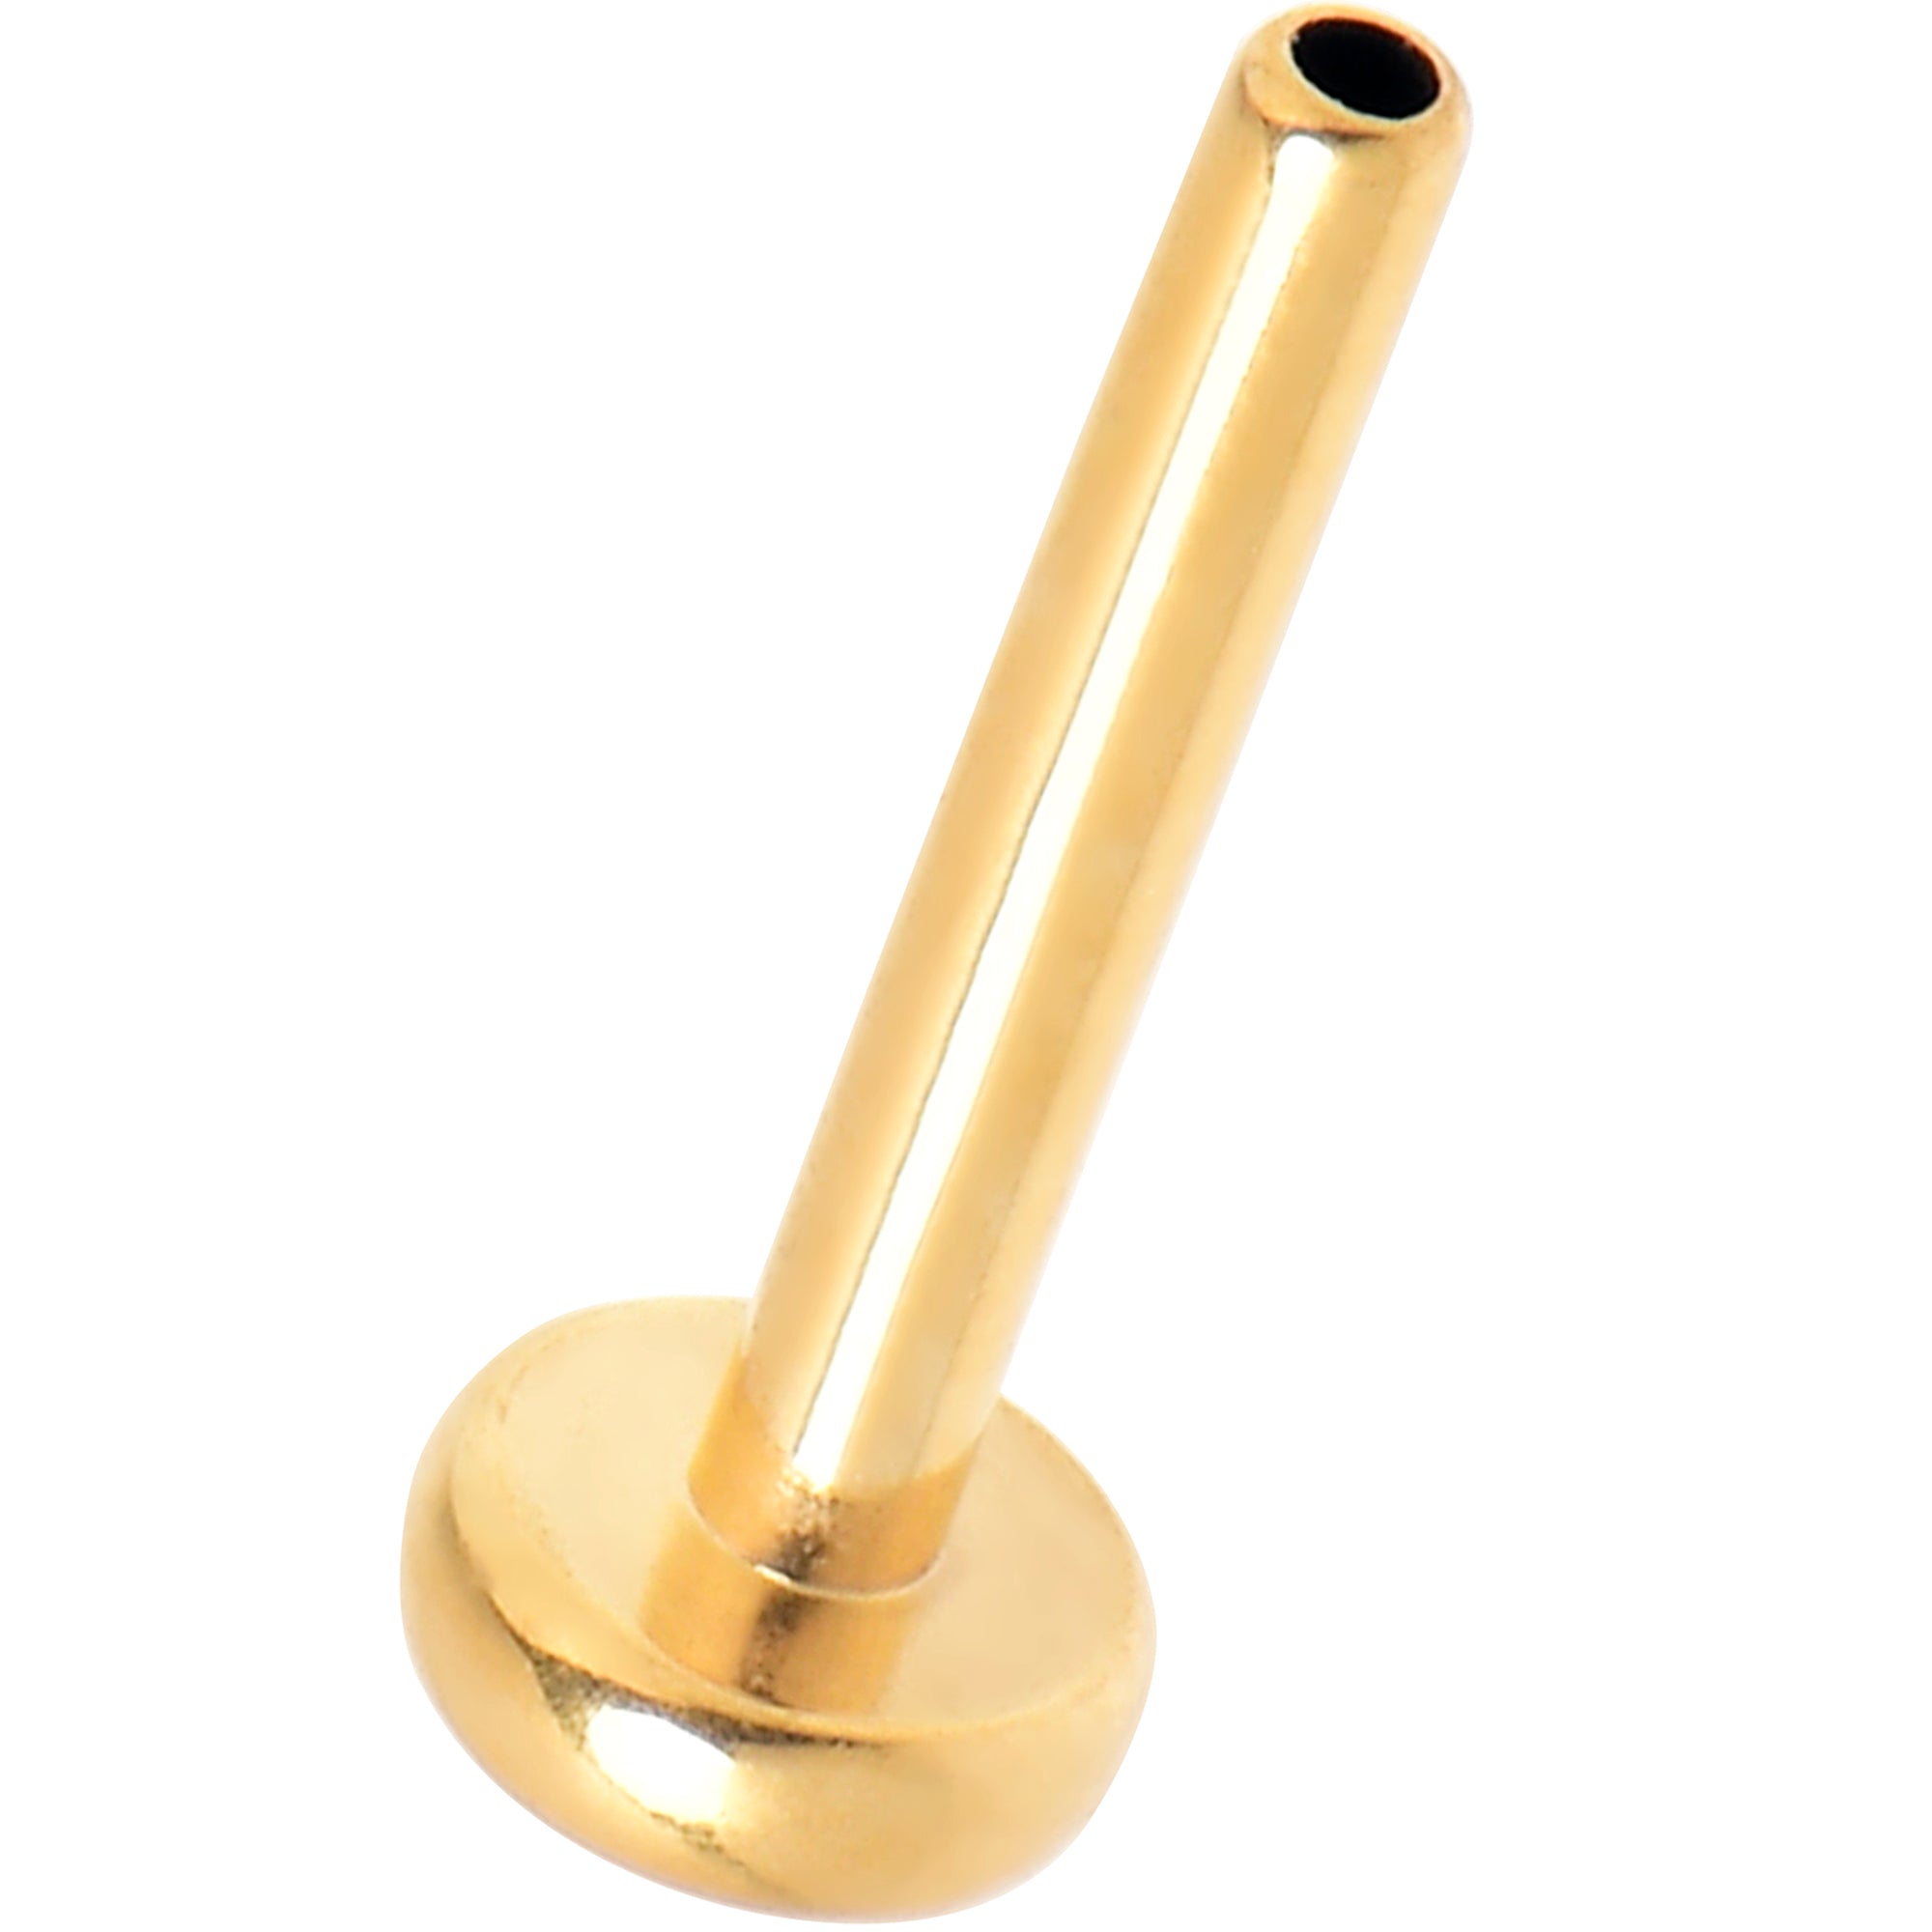 20 Gauge 1/4 Gold Tone ASTM F-136 Implant Grade Titanium Threadless Post Only Labret